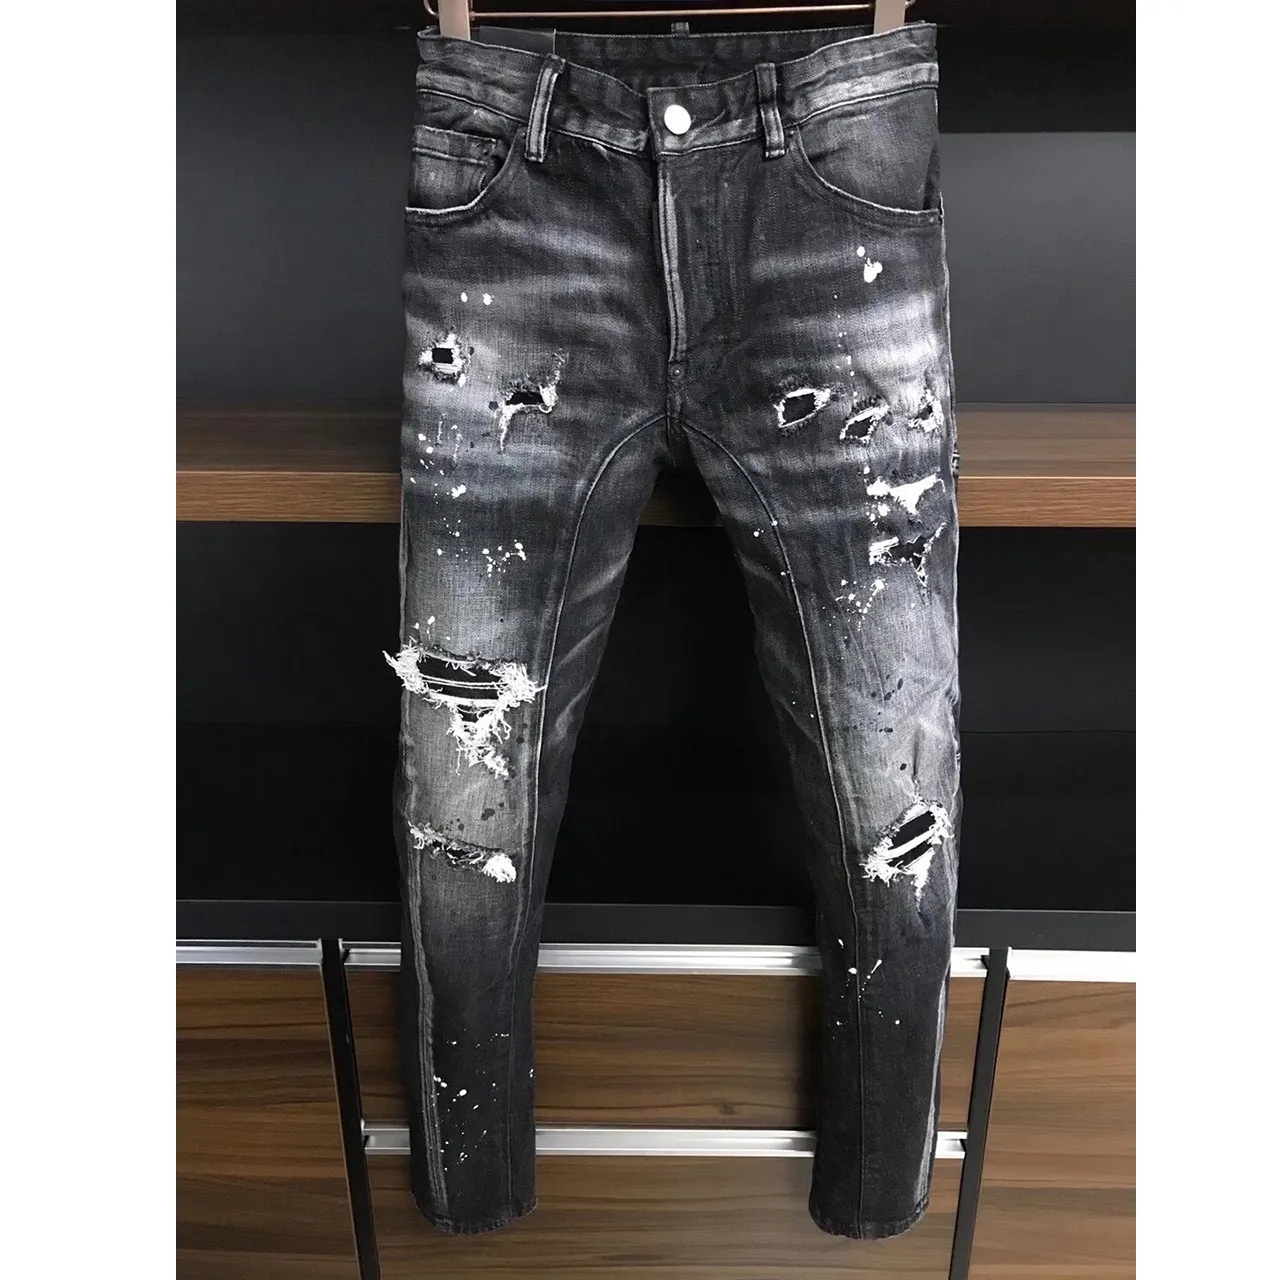 New Arrival 2023 Men's Cotton Ripped Hole Jeans Casual Slim Skinny Jeans Men Trousers D2 Jeans Stretch Hip Hop Denim Pants Male